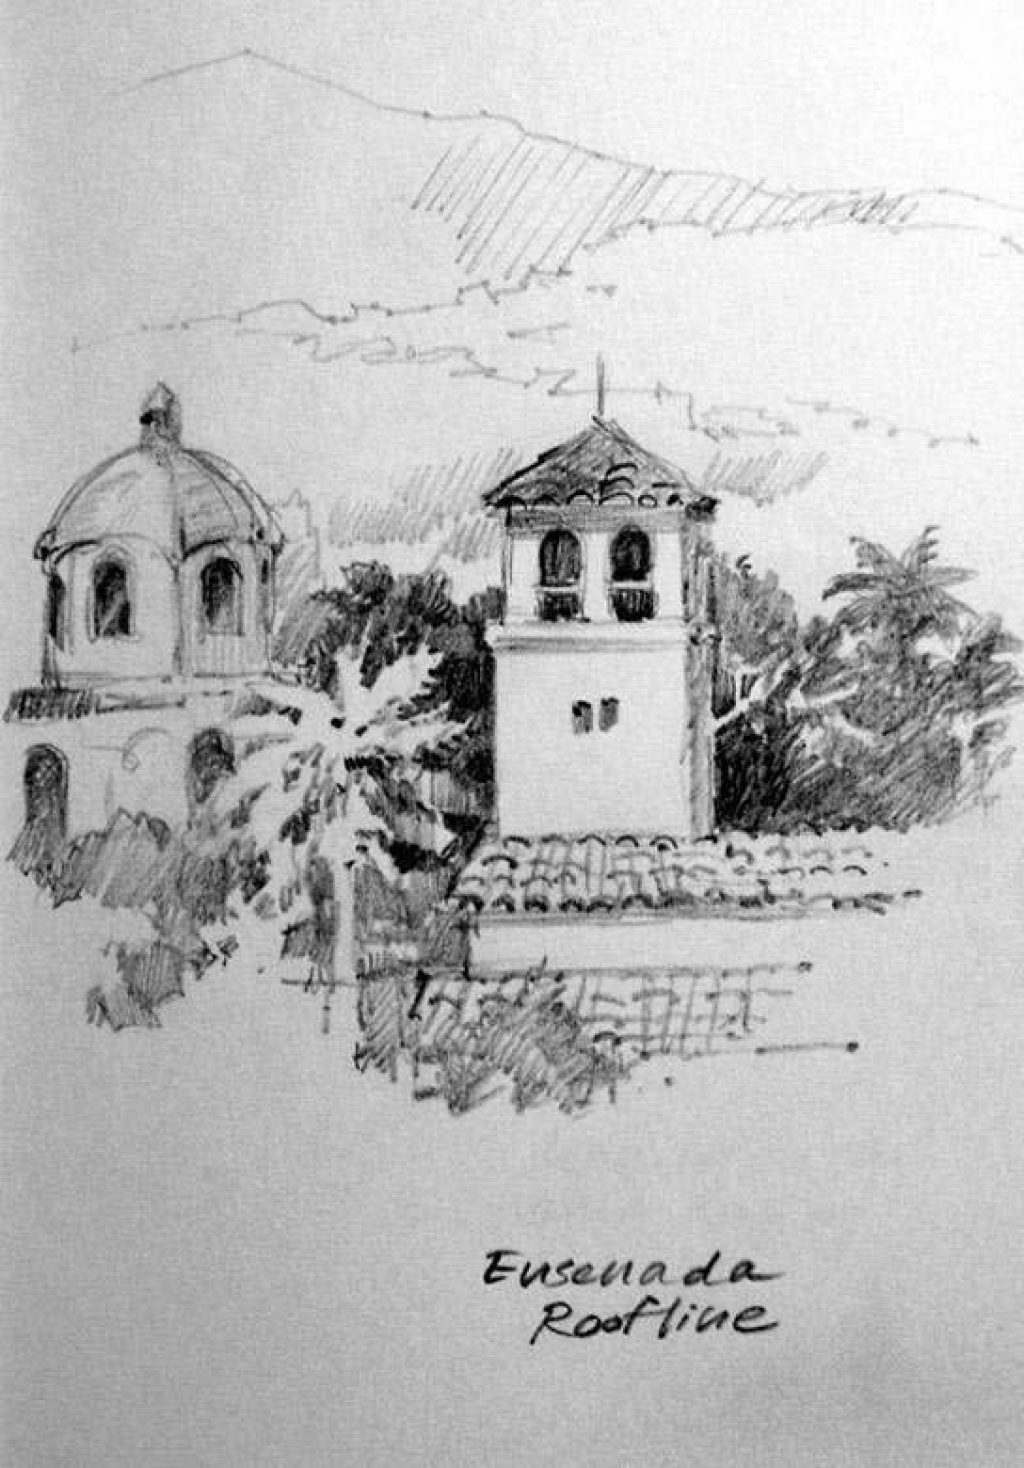 Sketchbook drawings of Ensenada Mexico by Roland Lee